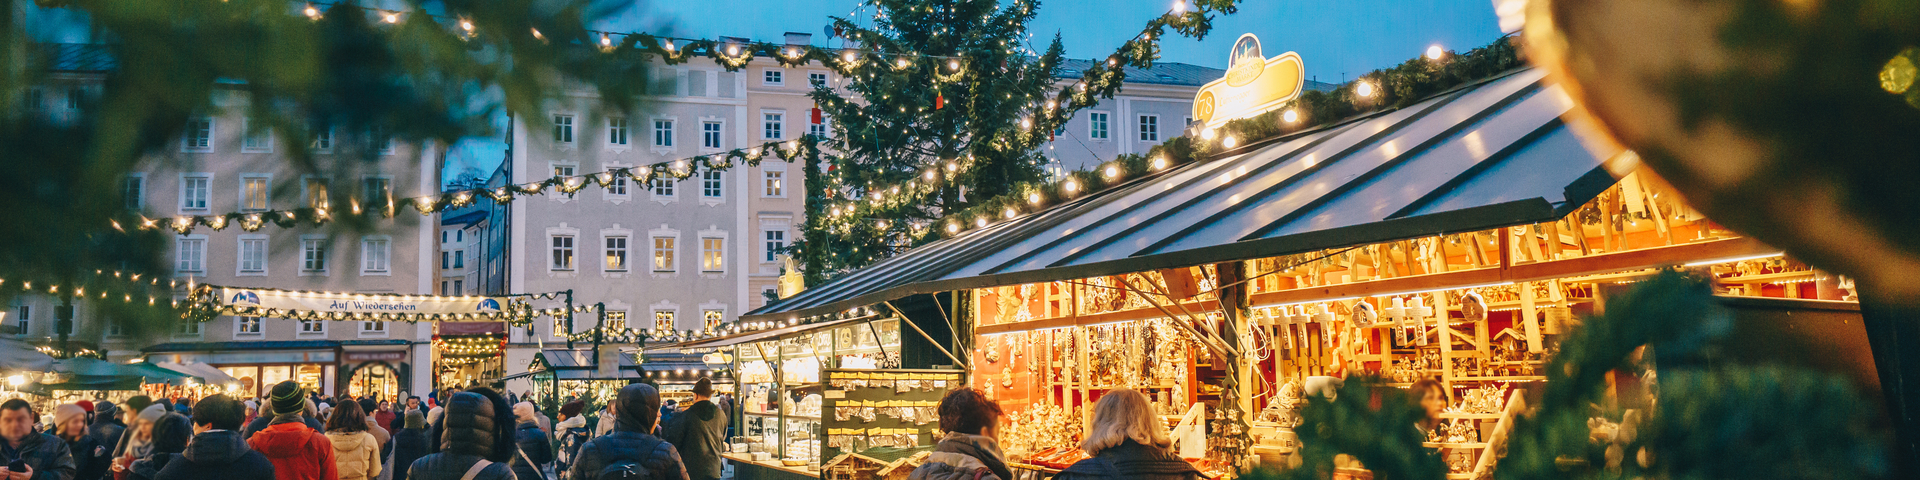 Danube Holiday Markets